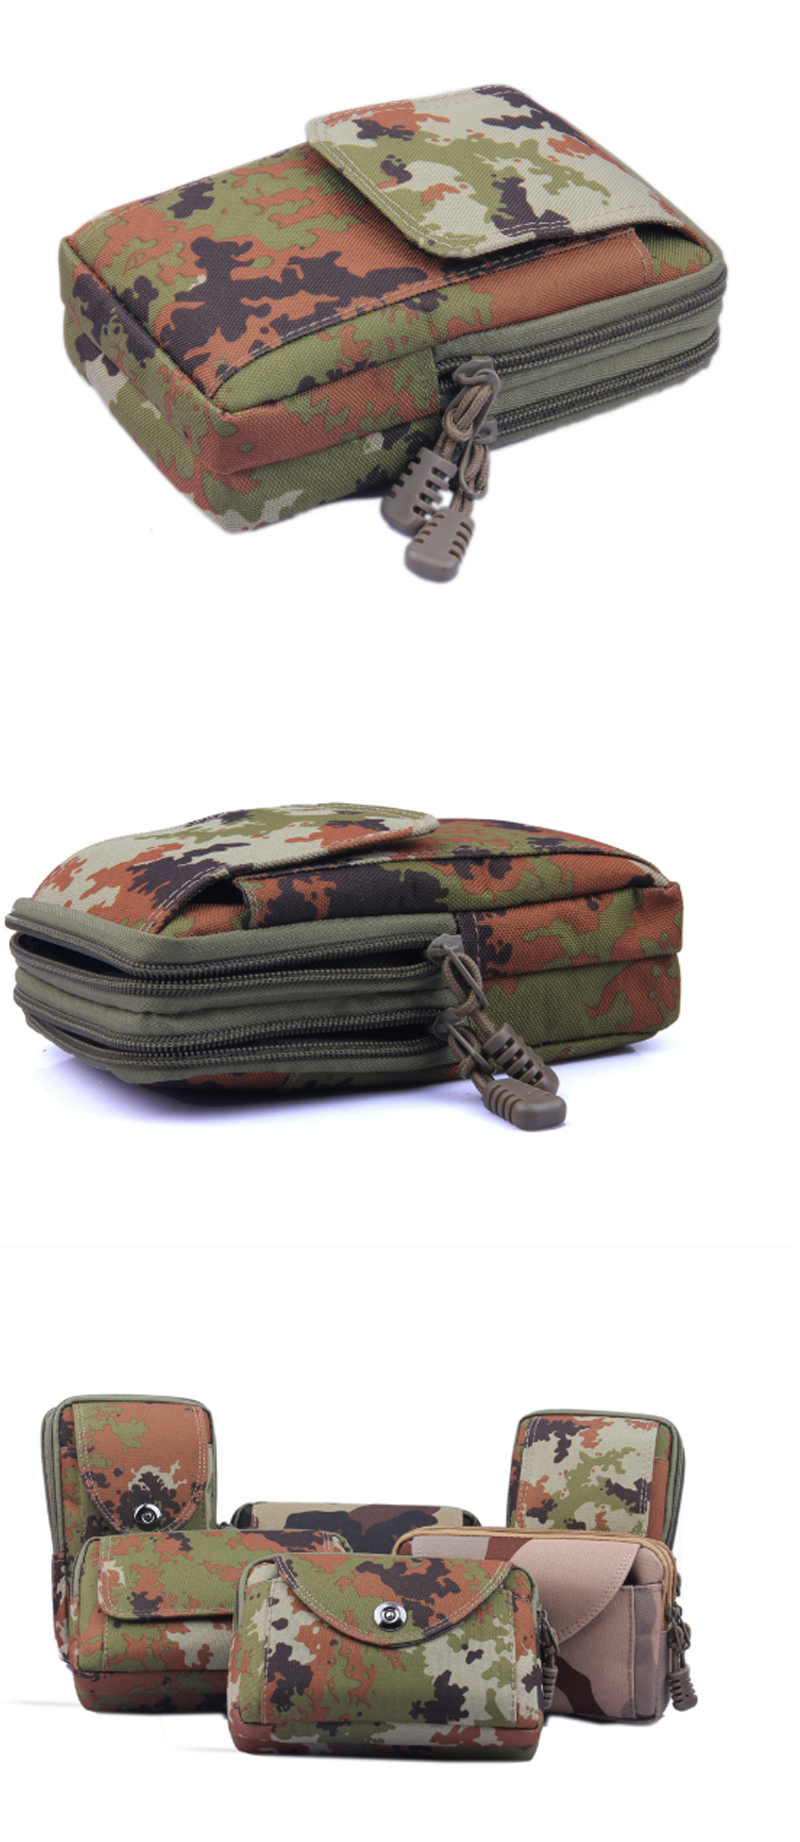 Couple-Tactical-Bag-Camouflage-Waist-Bag-Phone-Bag-Camping-Hiking-Hunting-Pocket-1437972-2